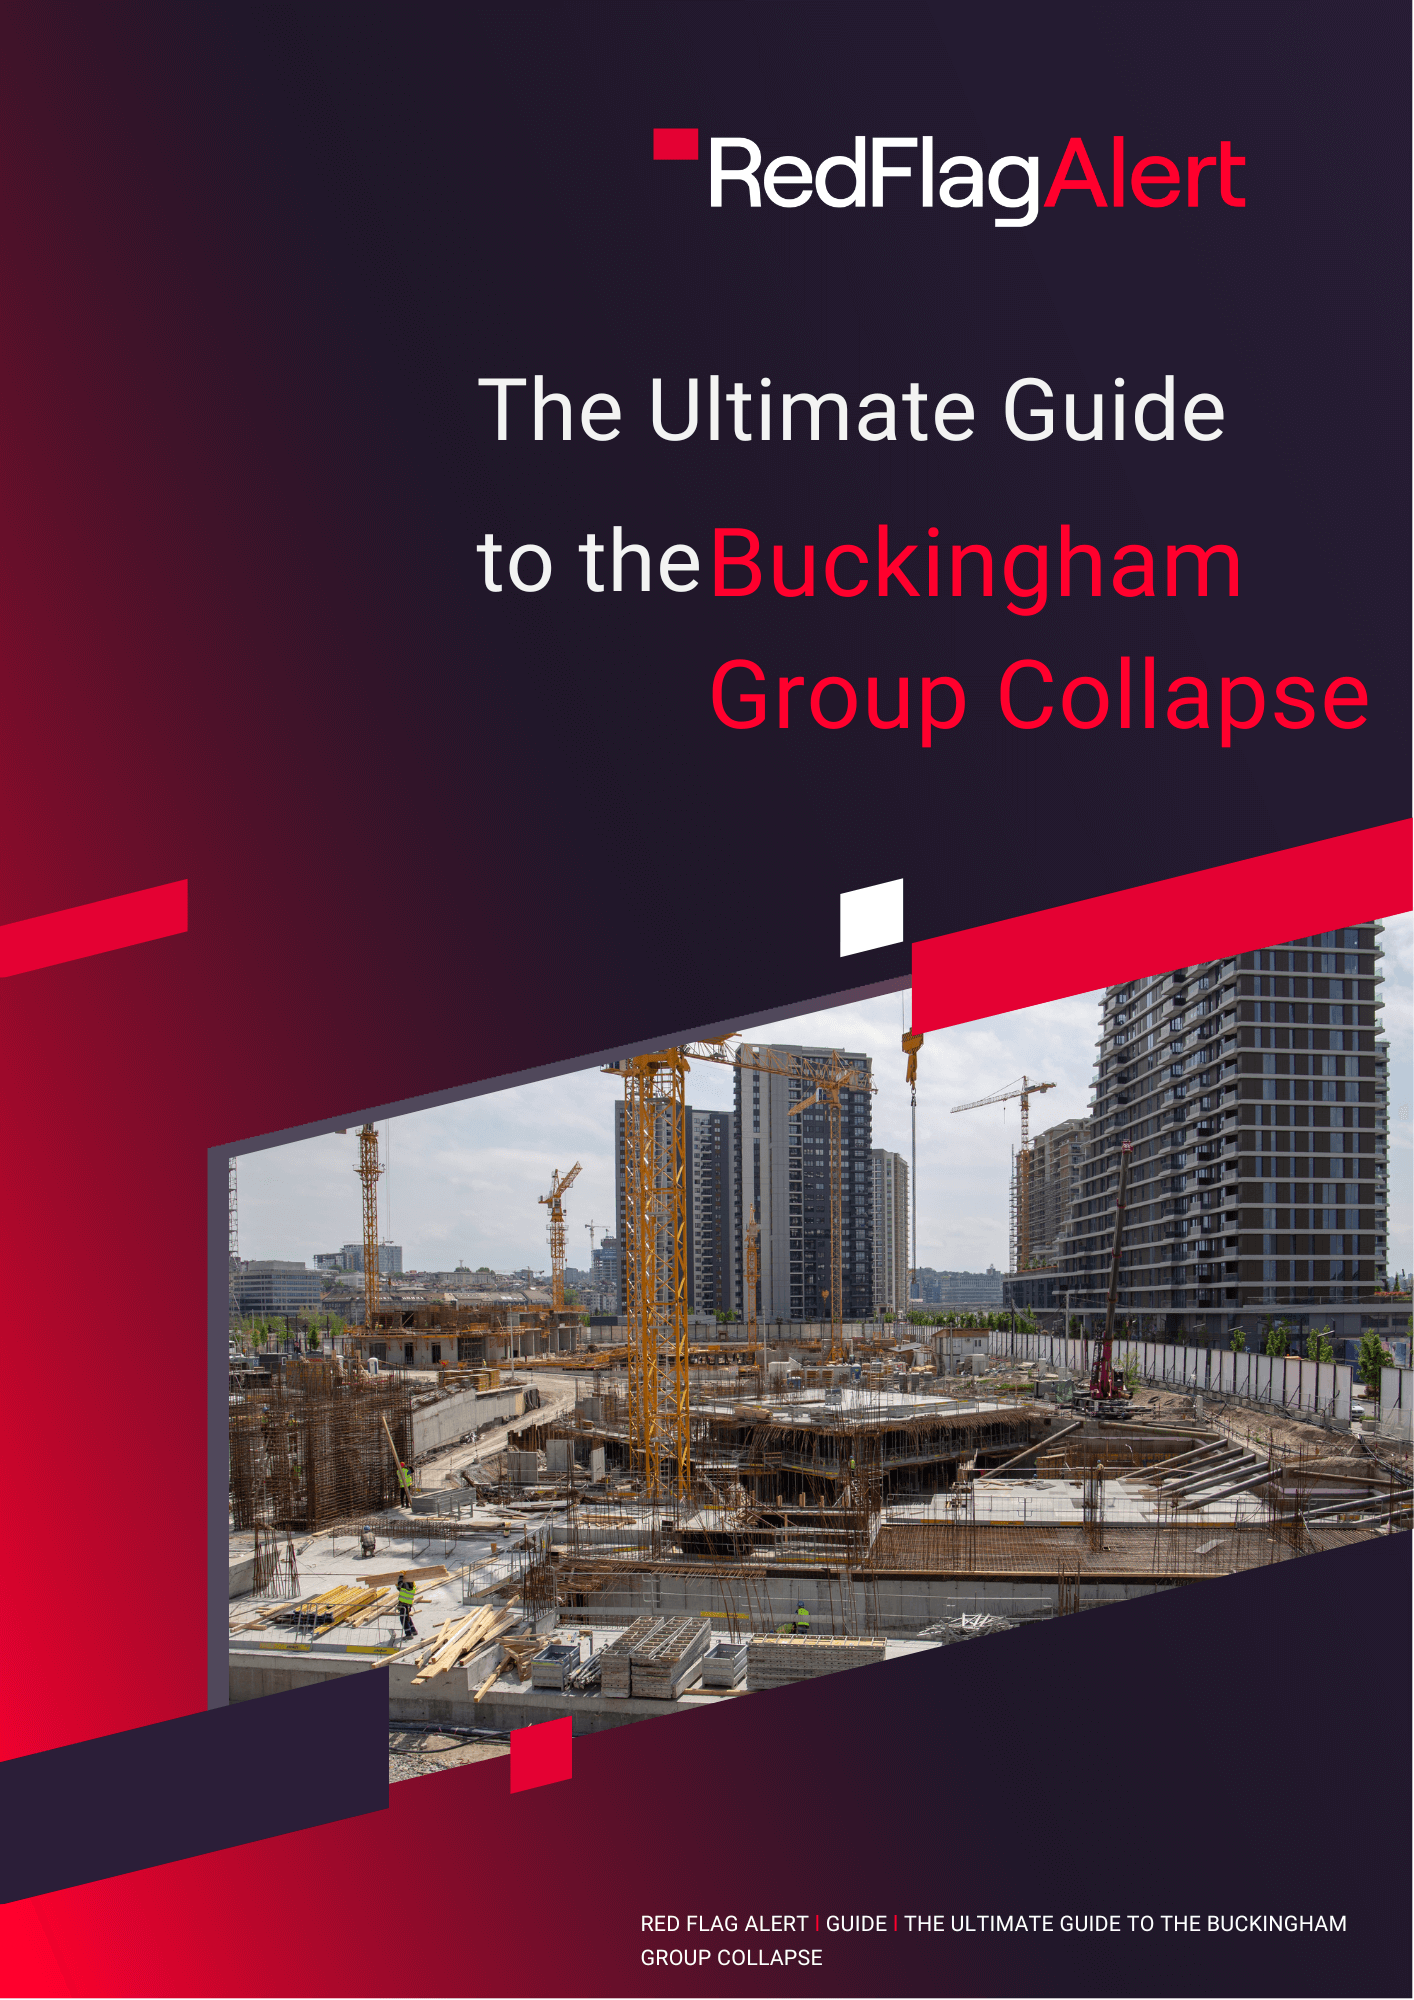 Buckingham Group Collapse